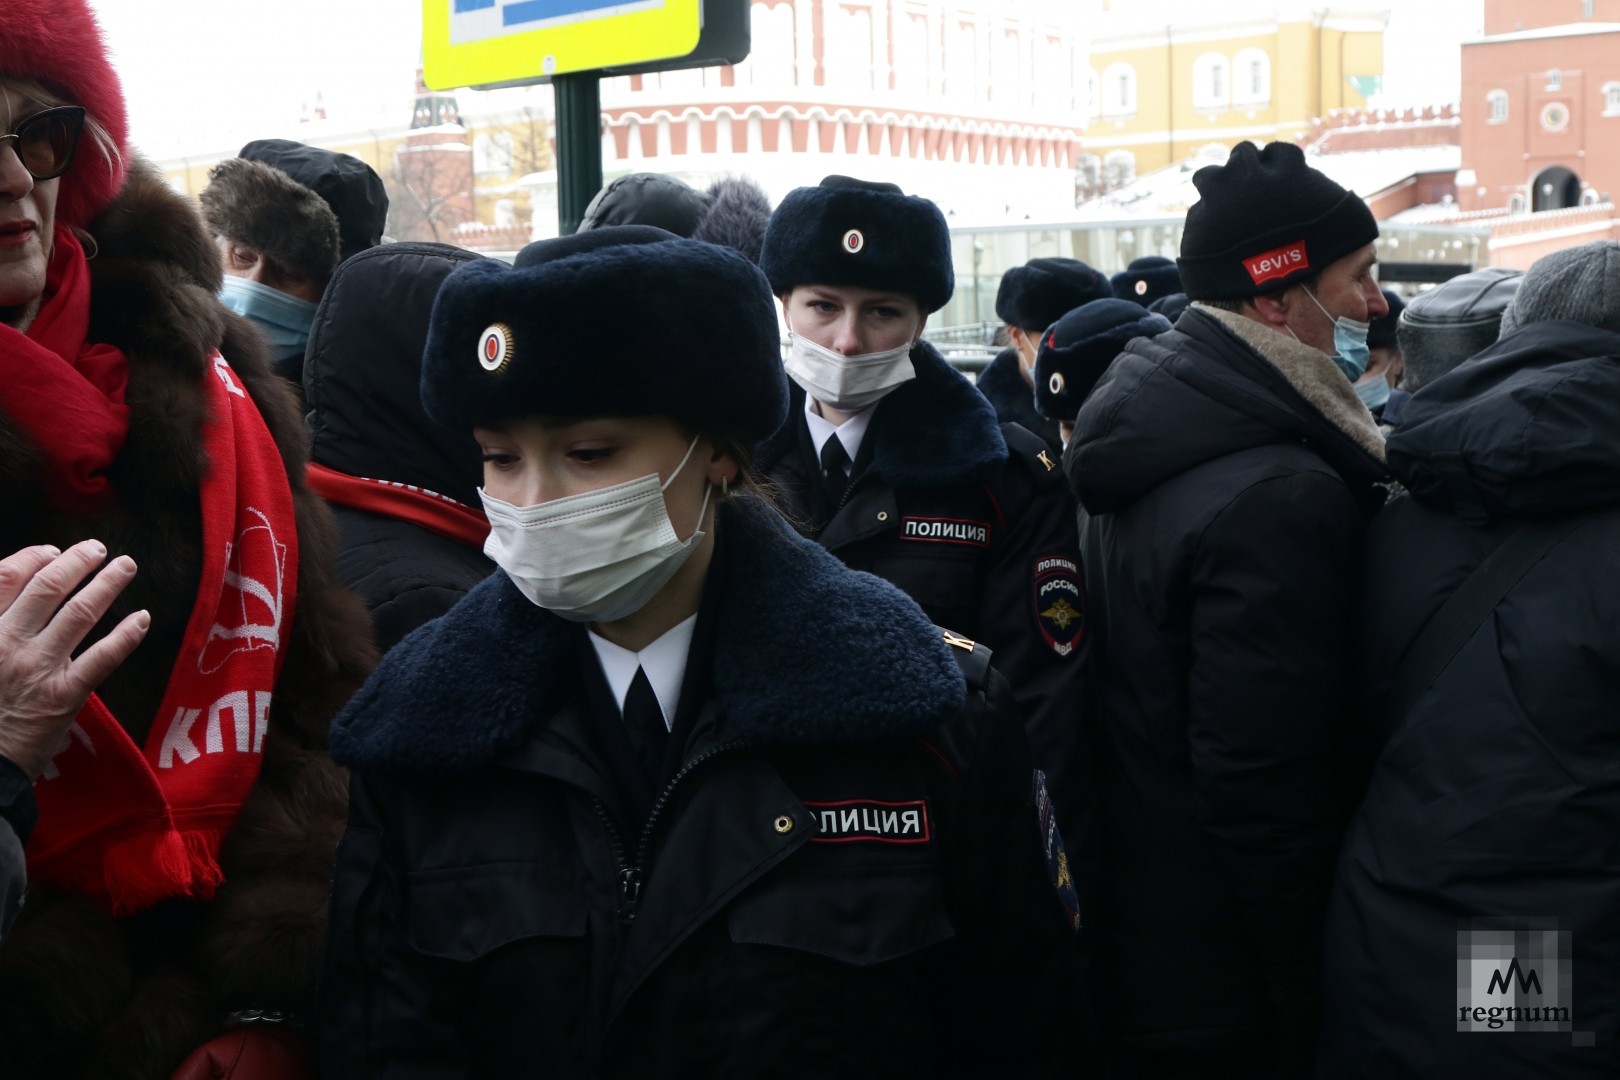 Митинги в москве 2023. Полицейские на митинге в Москве. КПРФ митинг 23 февраля. Девушки полицейские на митинге.